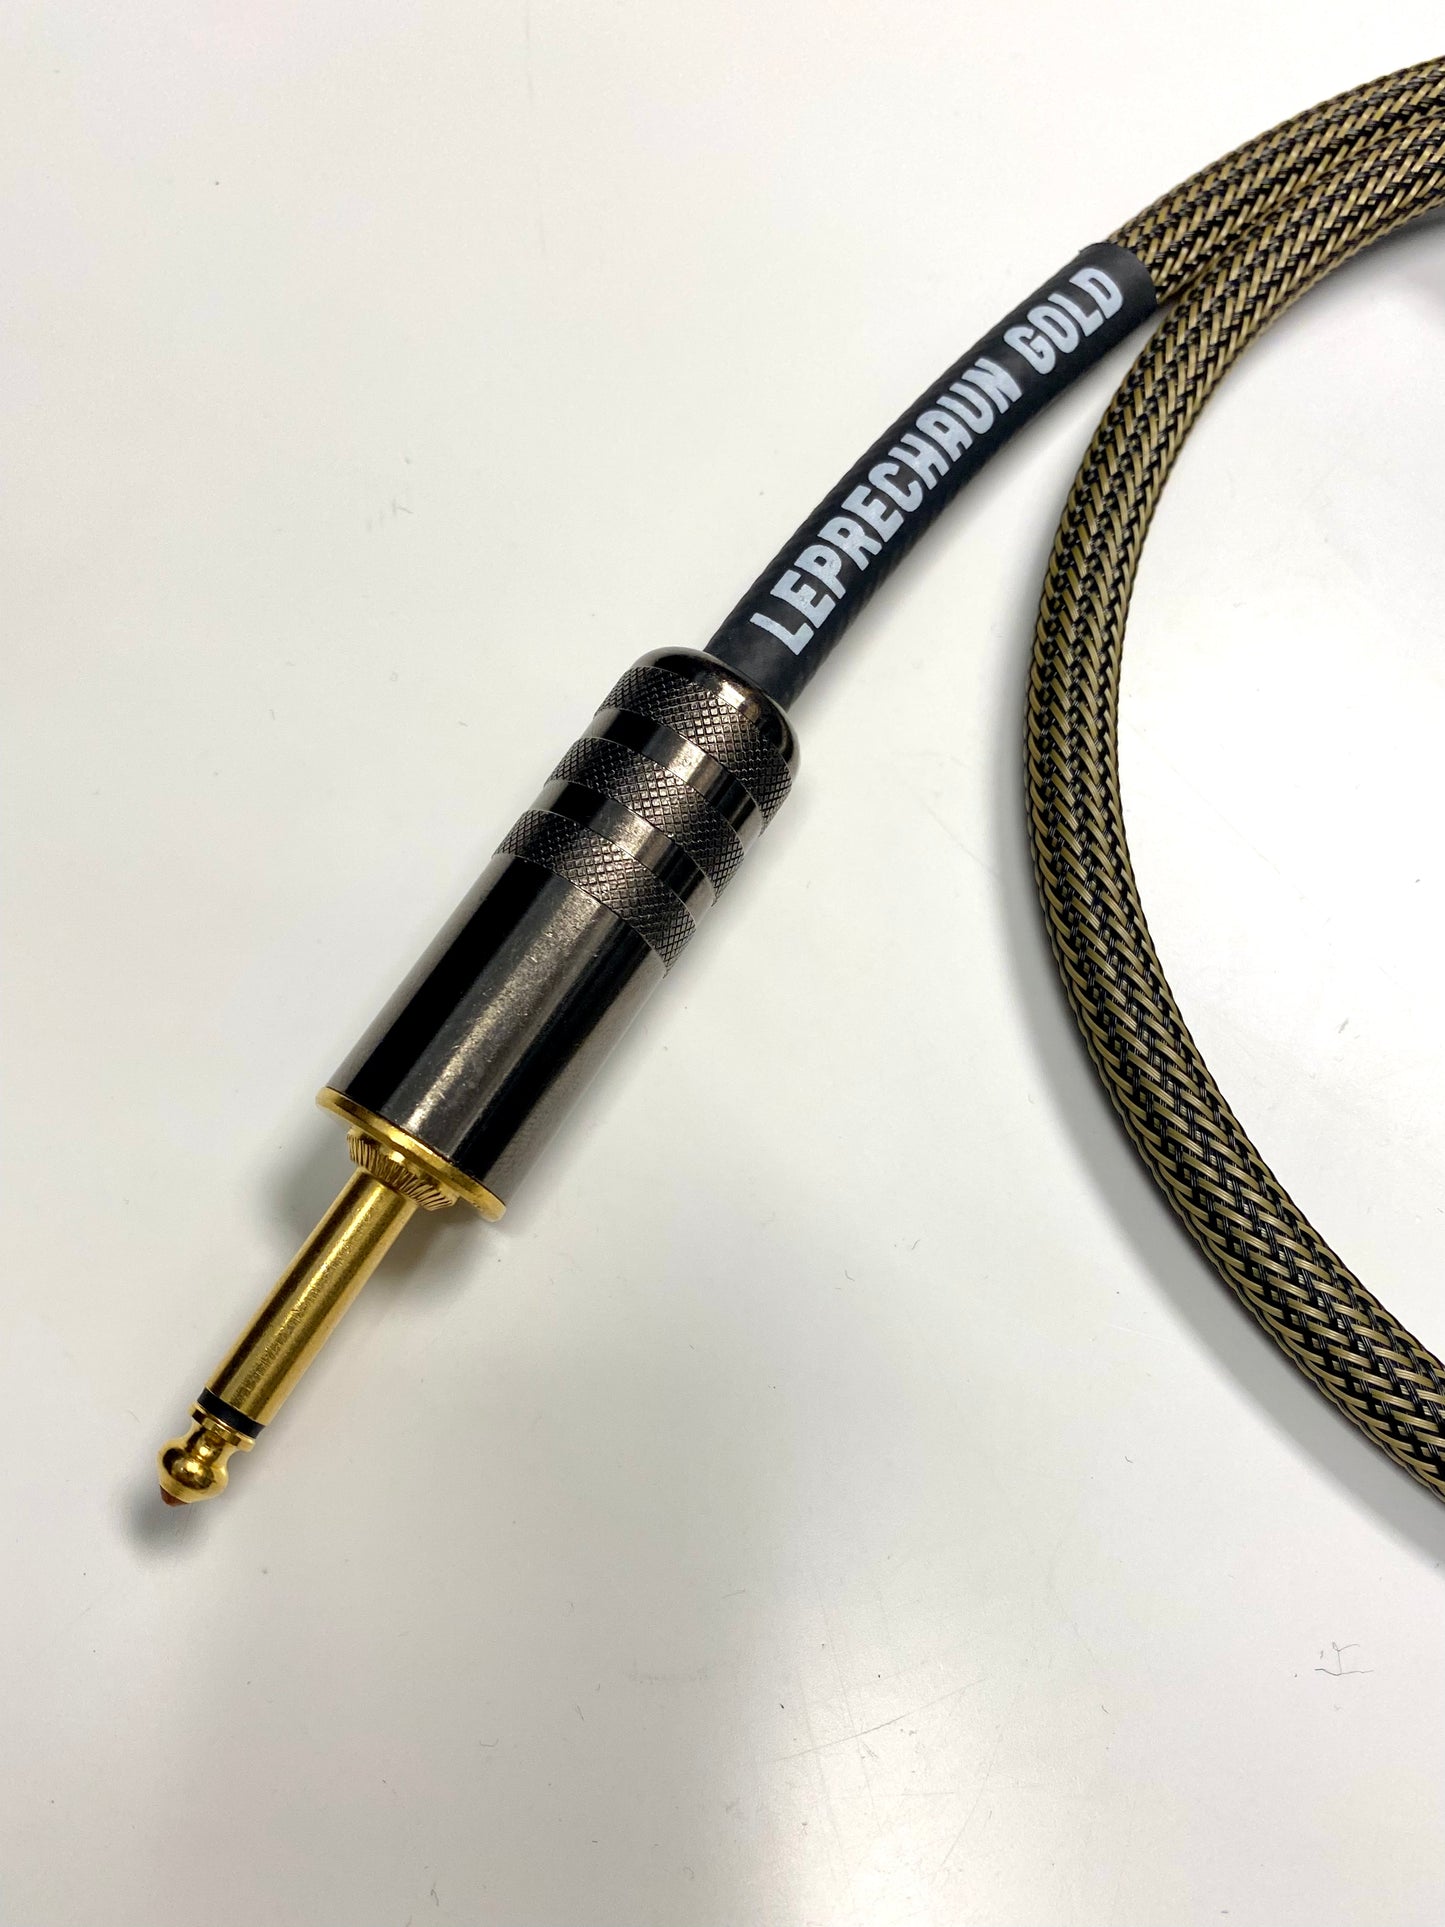 Leprechaun Gold Speaker Cable (Carbon Gold)